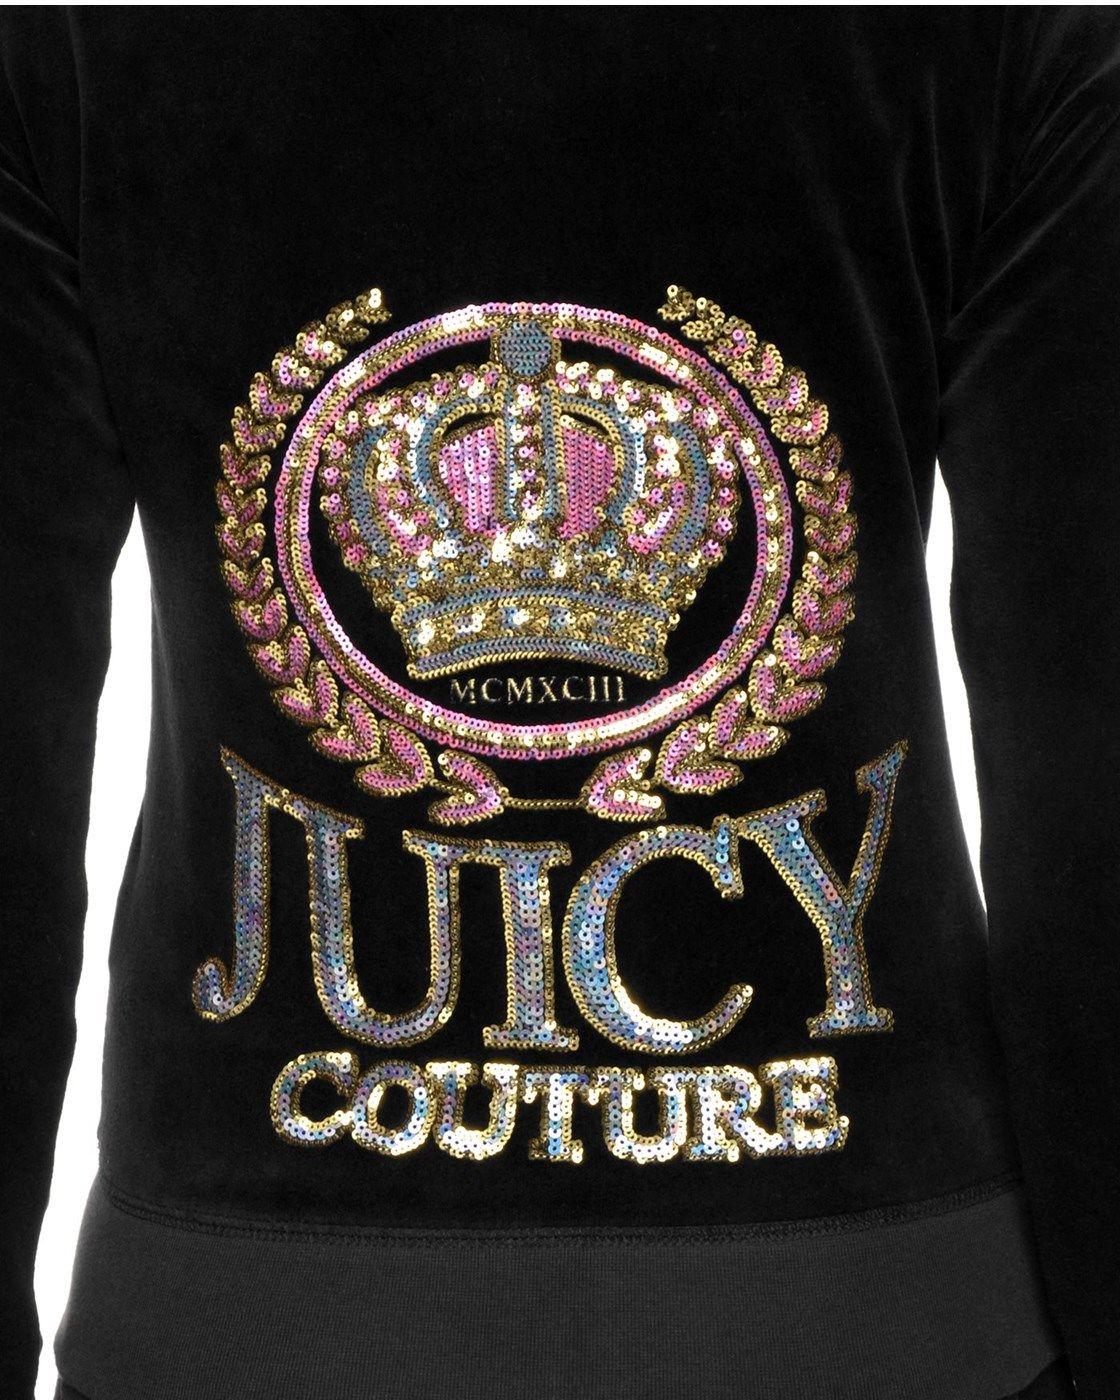 Juicy Couture Crown Logo - LogoDix